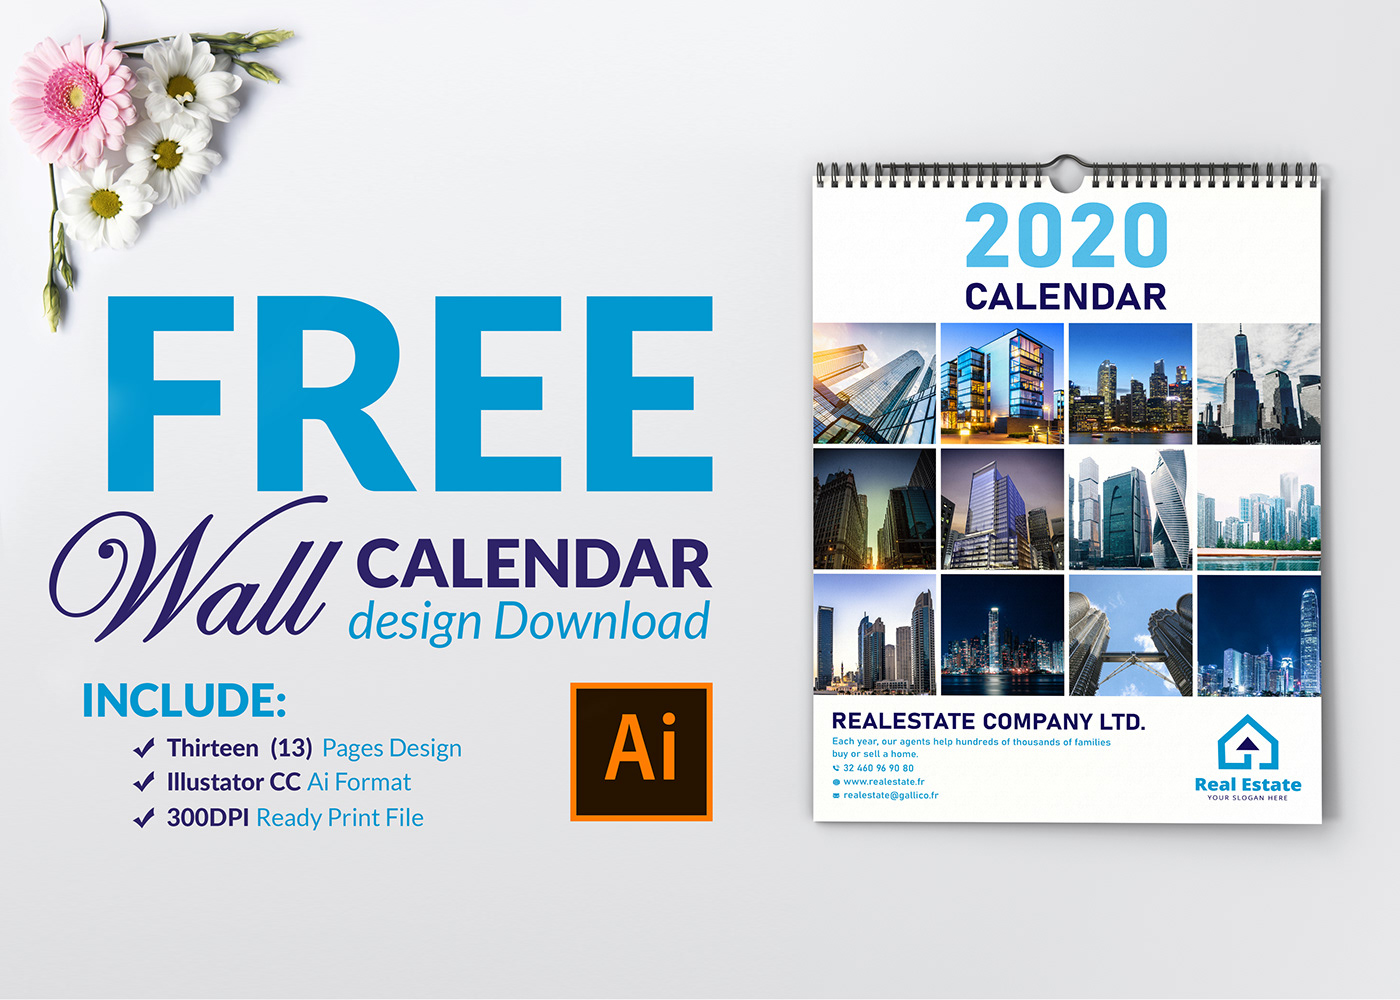 free calendar free download calendar design 2020 calendar design Free Template Download free calendar template Free Template calendar template 2020 free